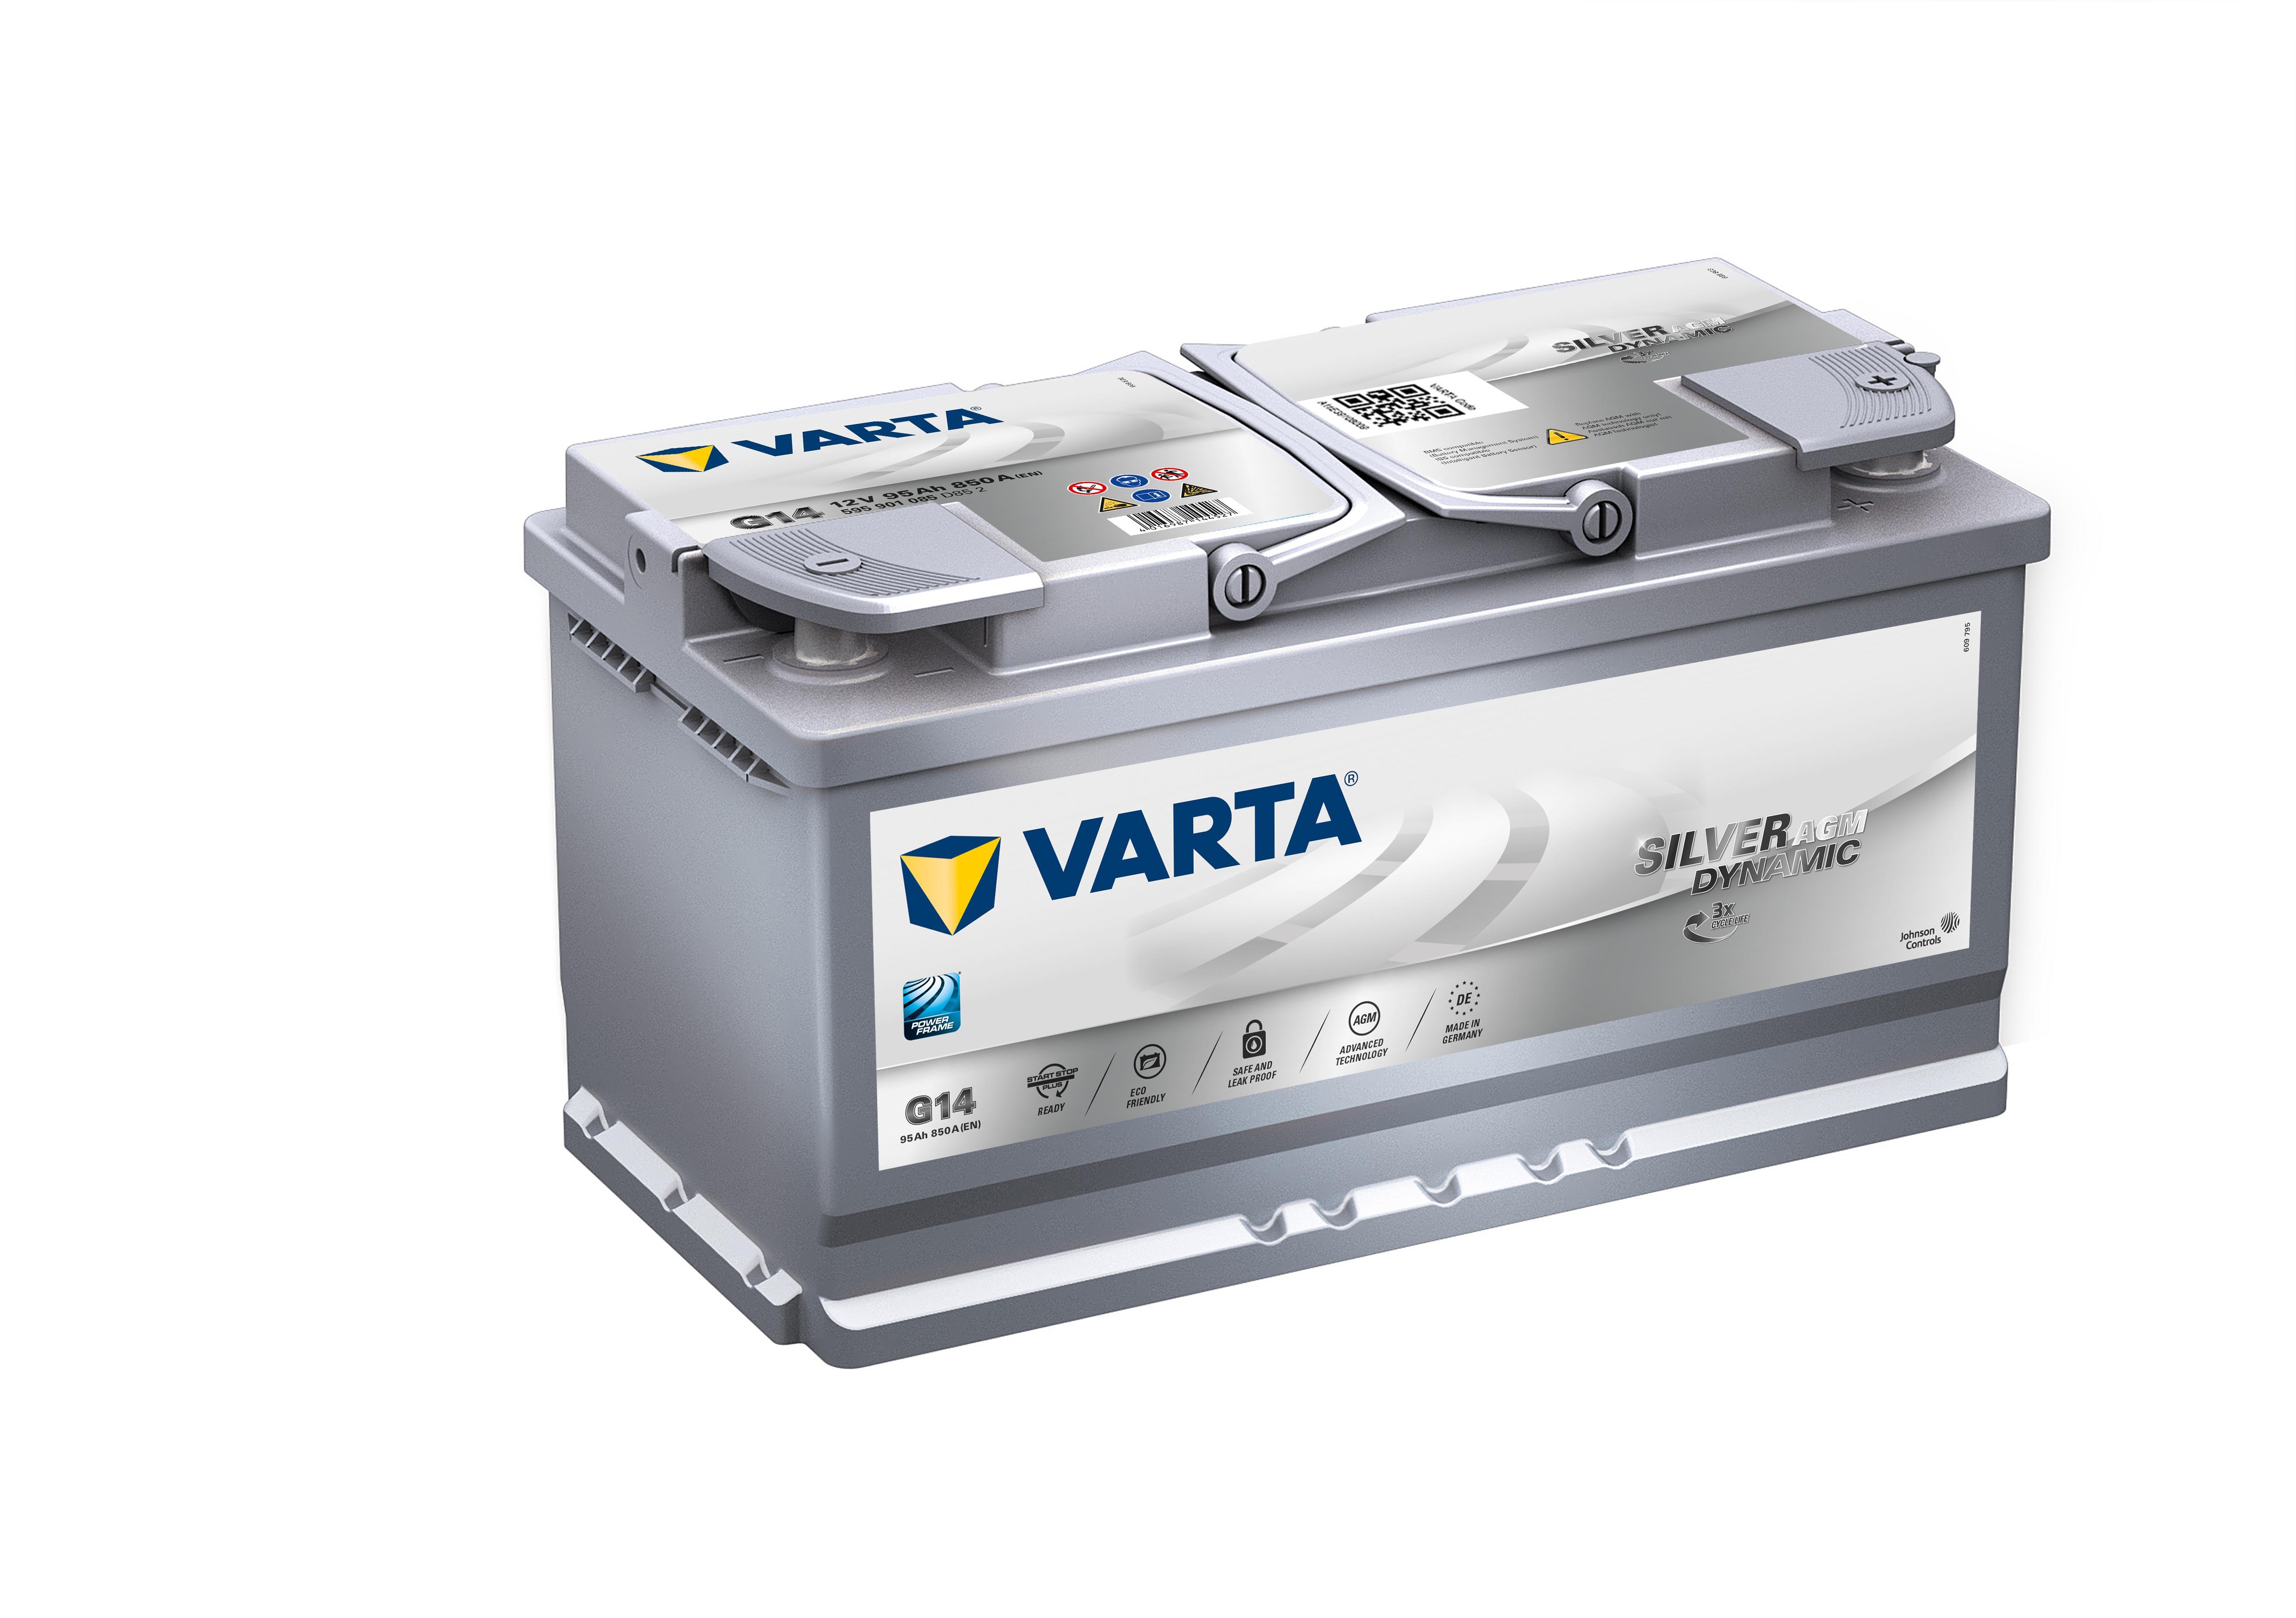 Аккумулятор автомобильный 80ач. Varta start-stop Plus 6ct-80 r+. 595901085 Varta AGM. Varta Silver Dynamic g14. Varta g14 595 901 085.